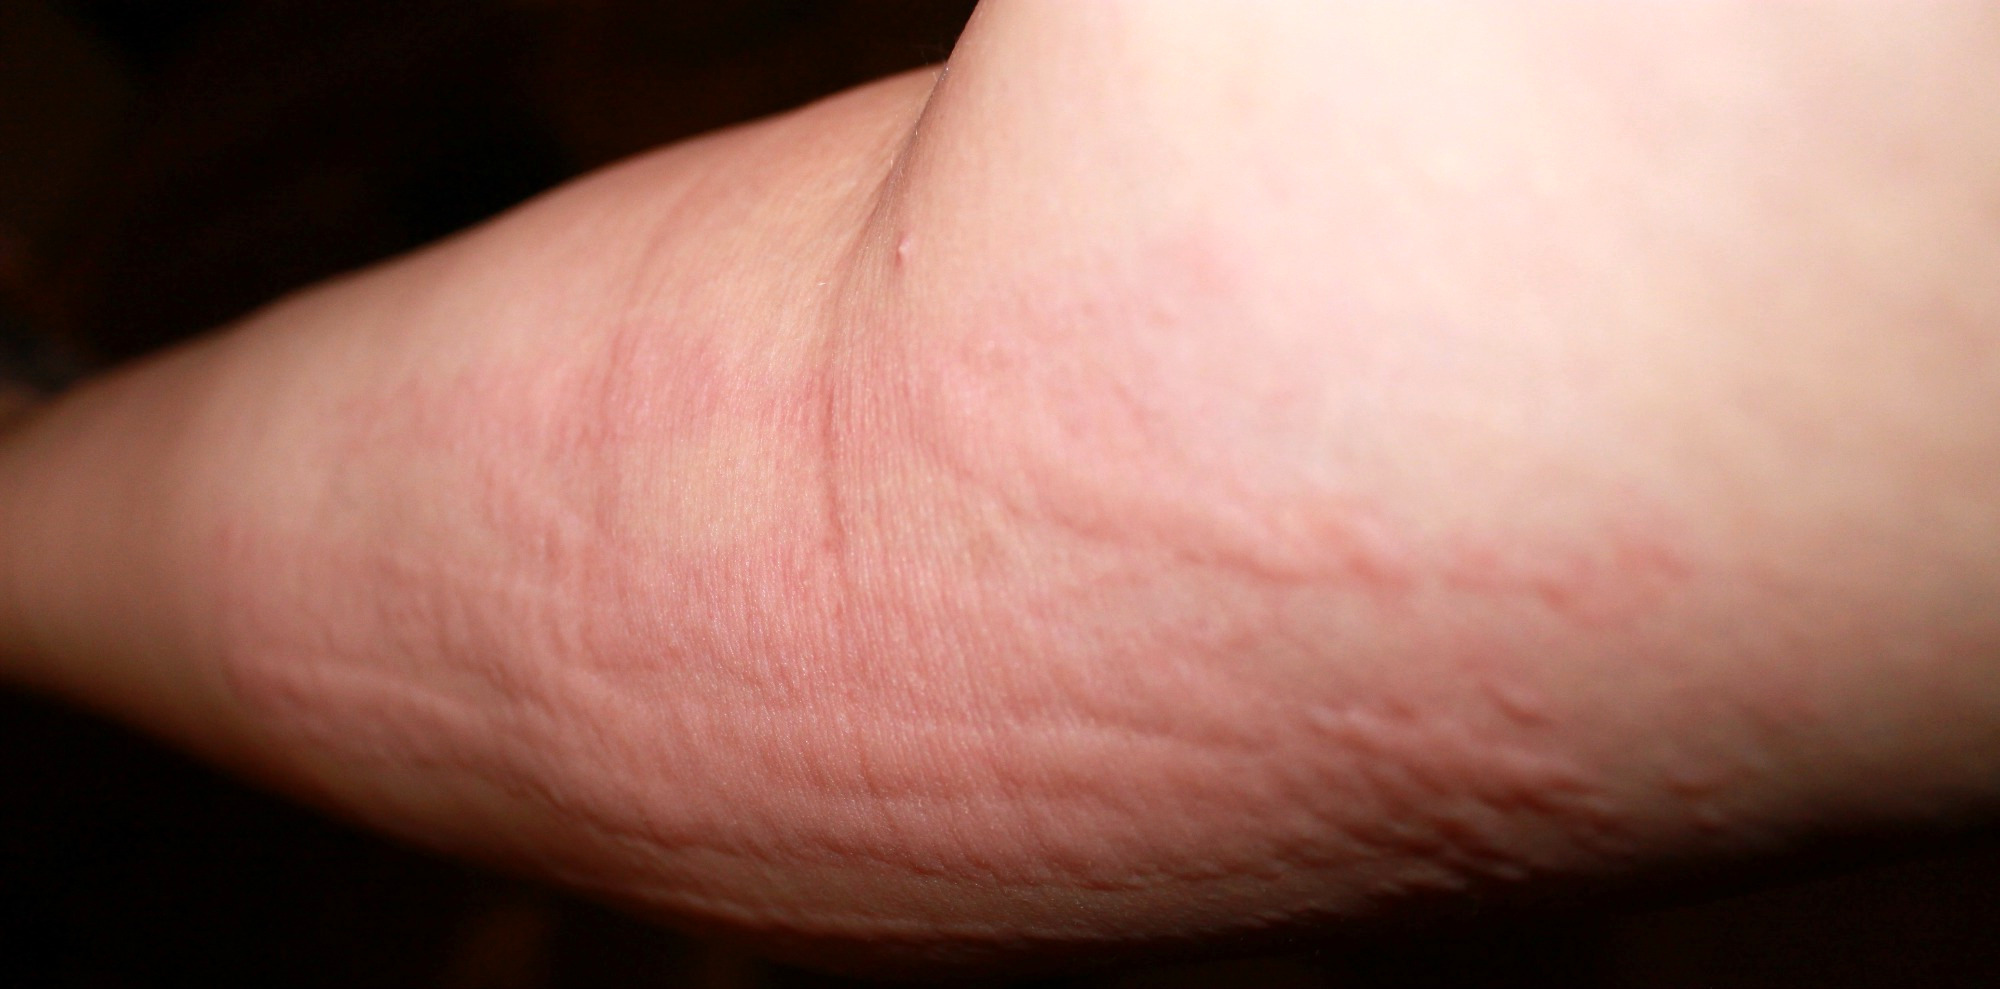 Common skin rashes - hives